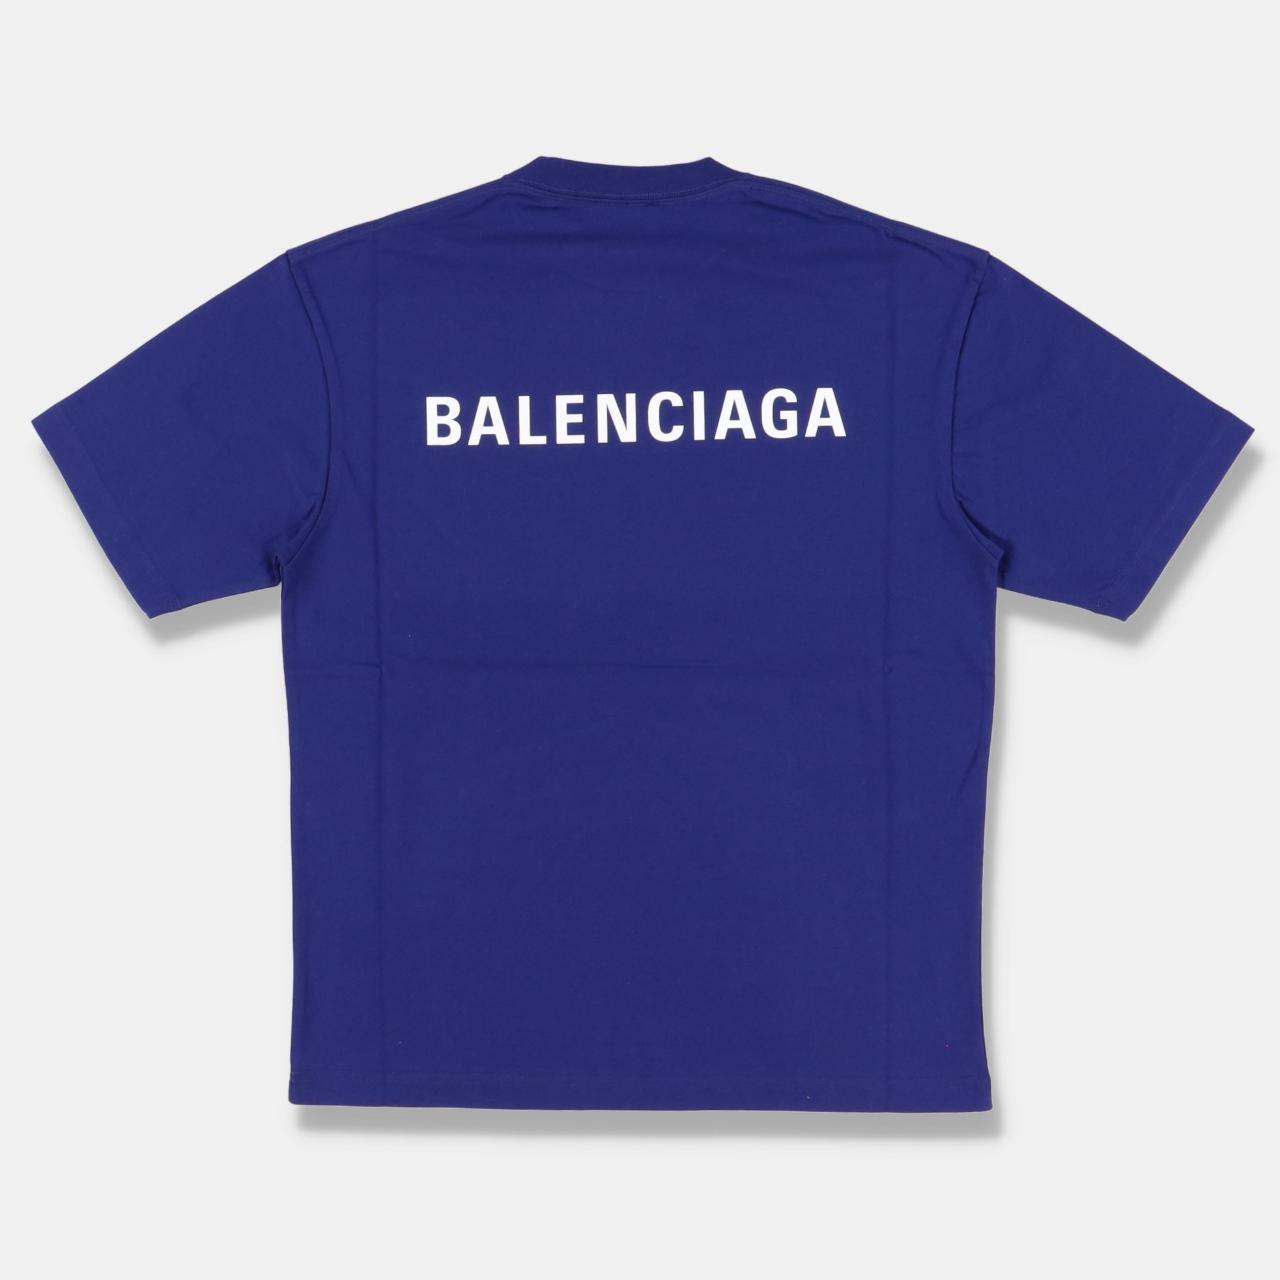 Product Image 1 - Balenciaga Blue Logo Print T-Shirt

-Size